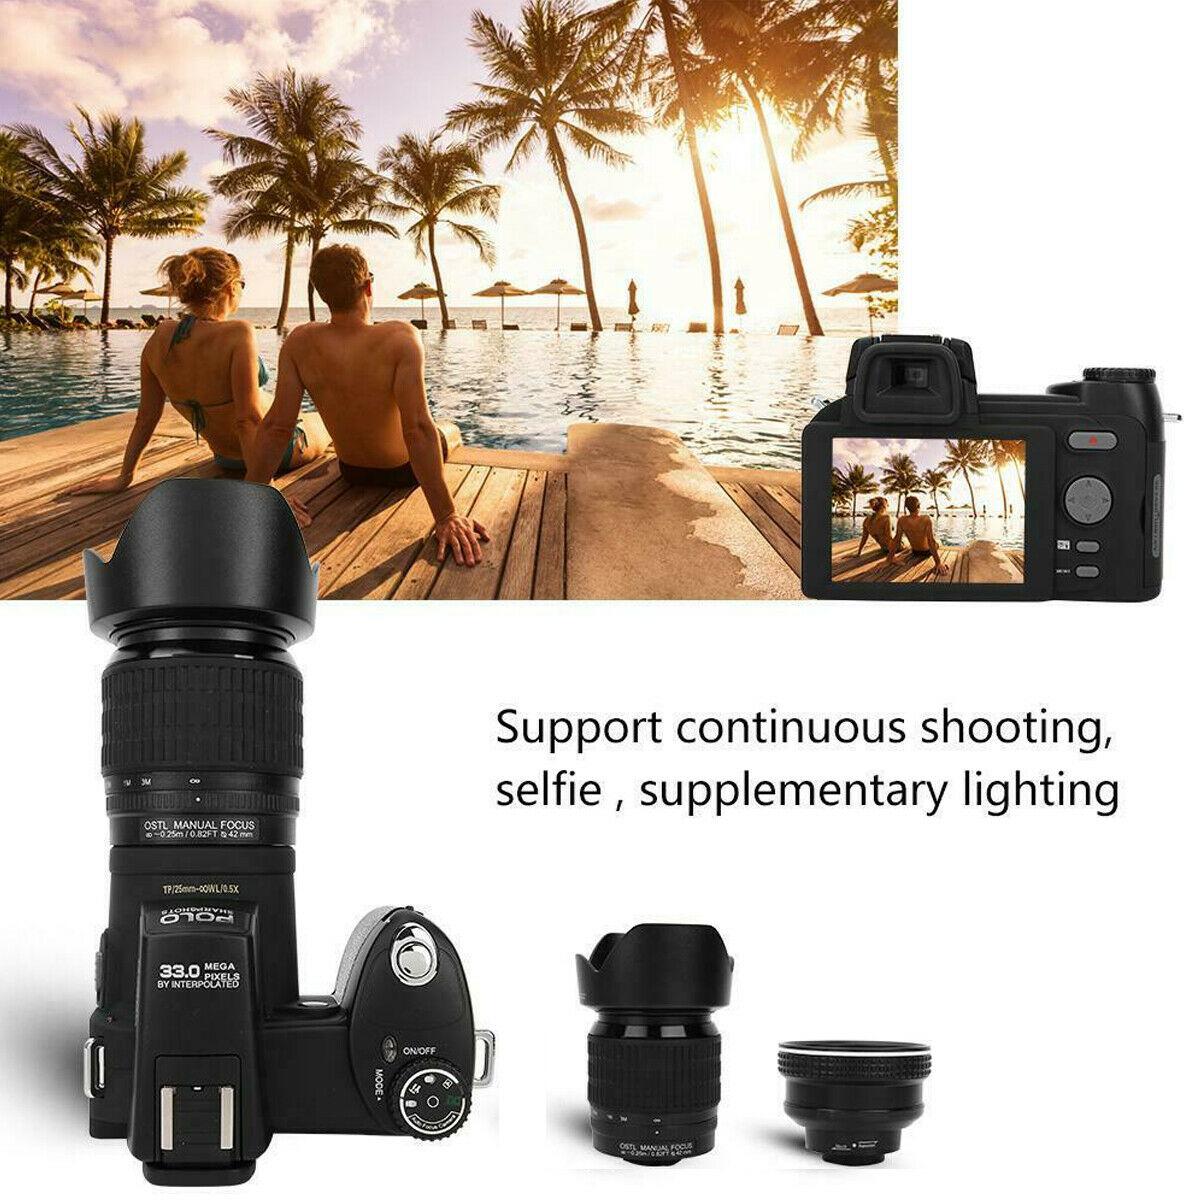 Polo Sharpshots Digital Camera FHD 1080p Auto Focus 33mp Built-in Flashlight